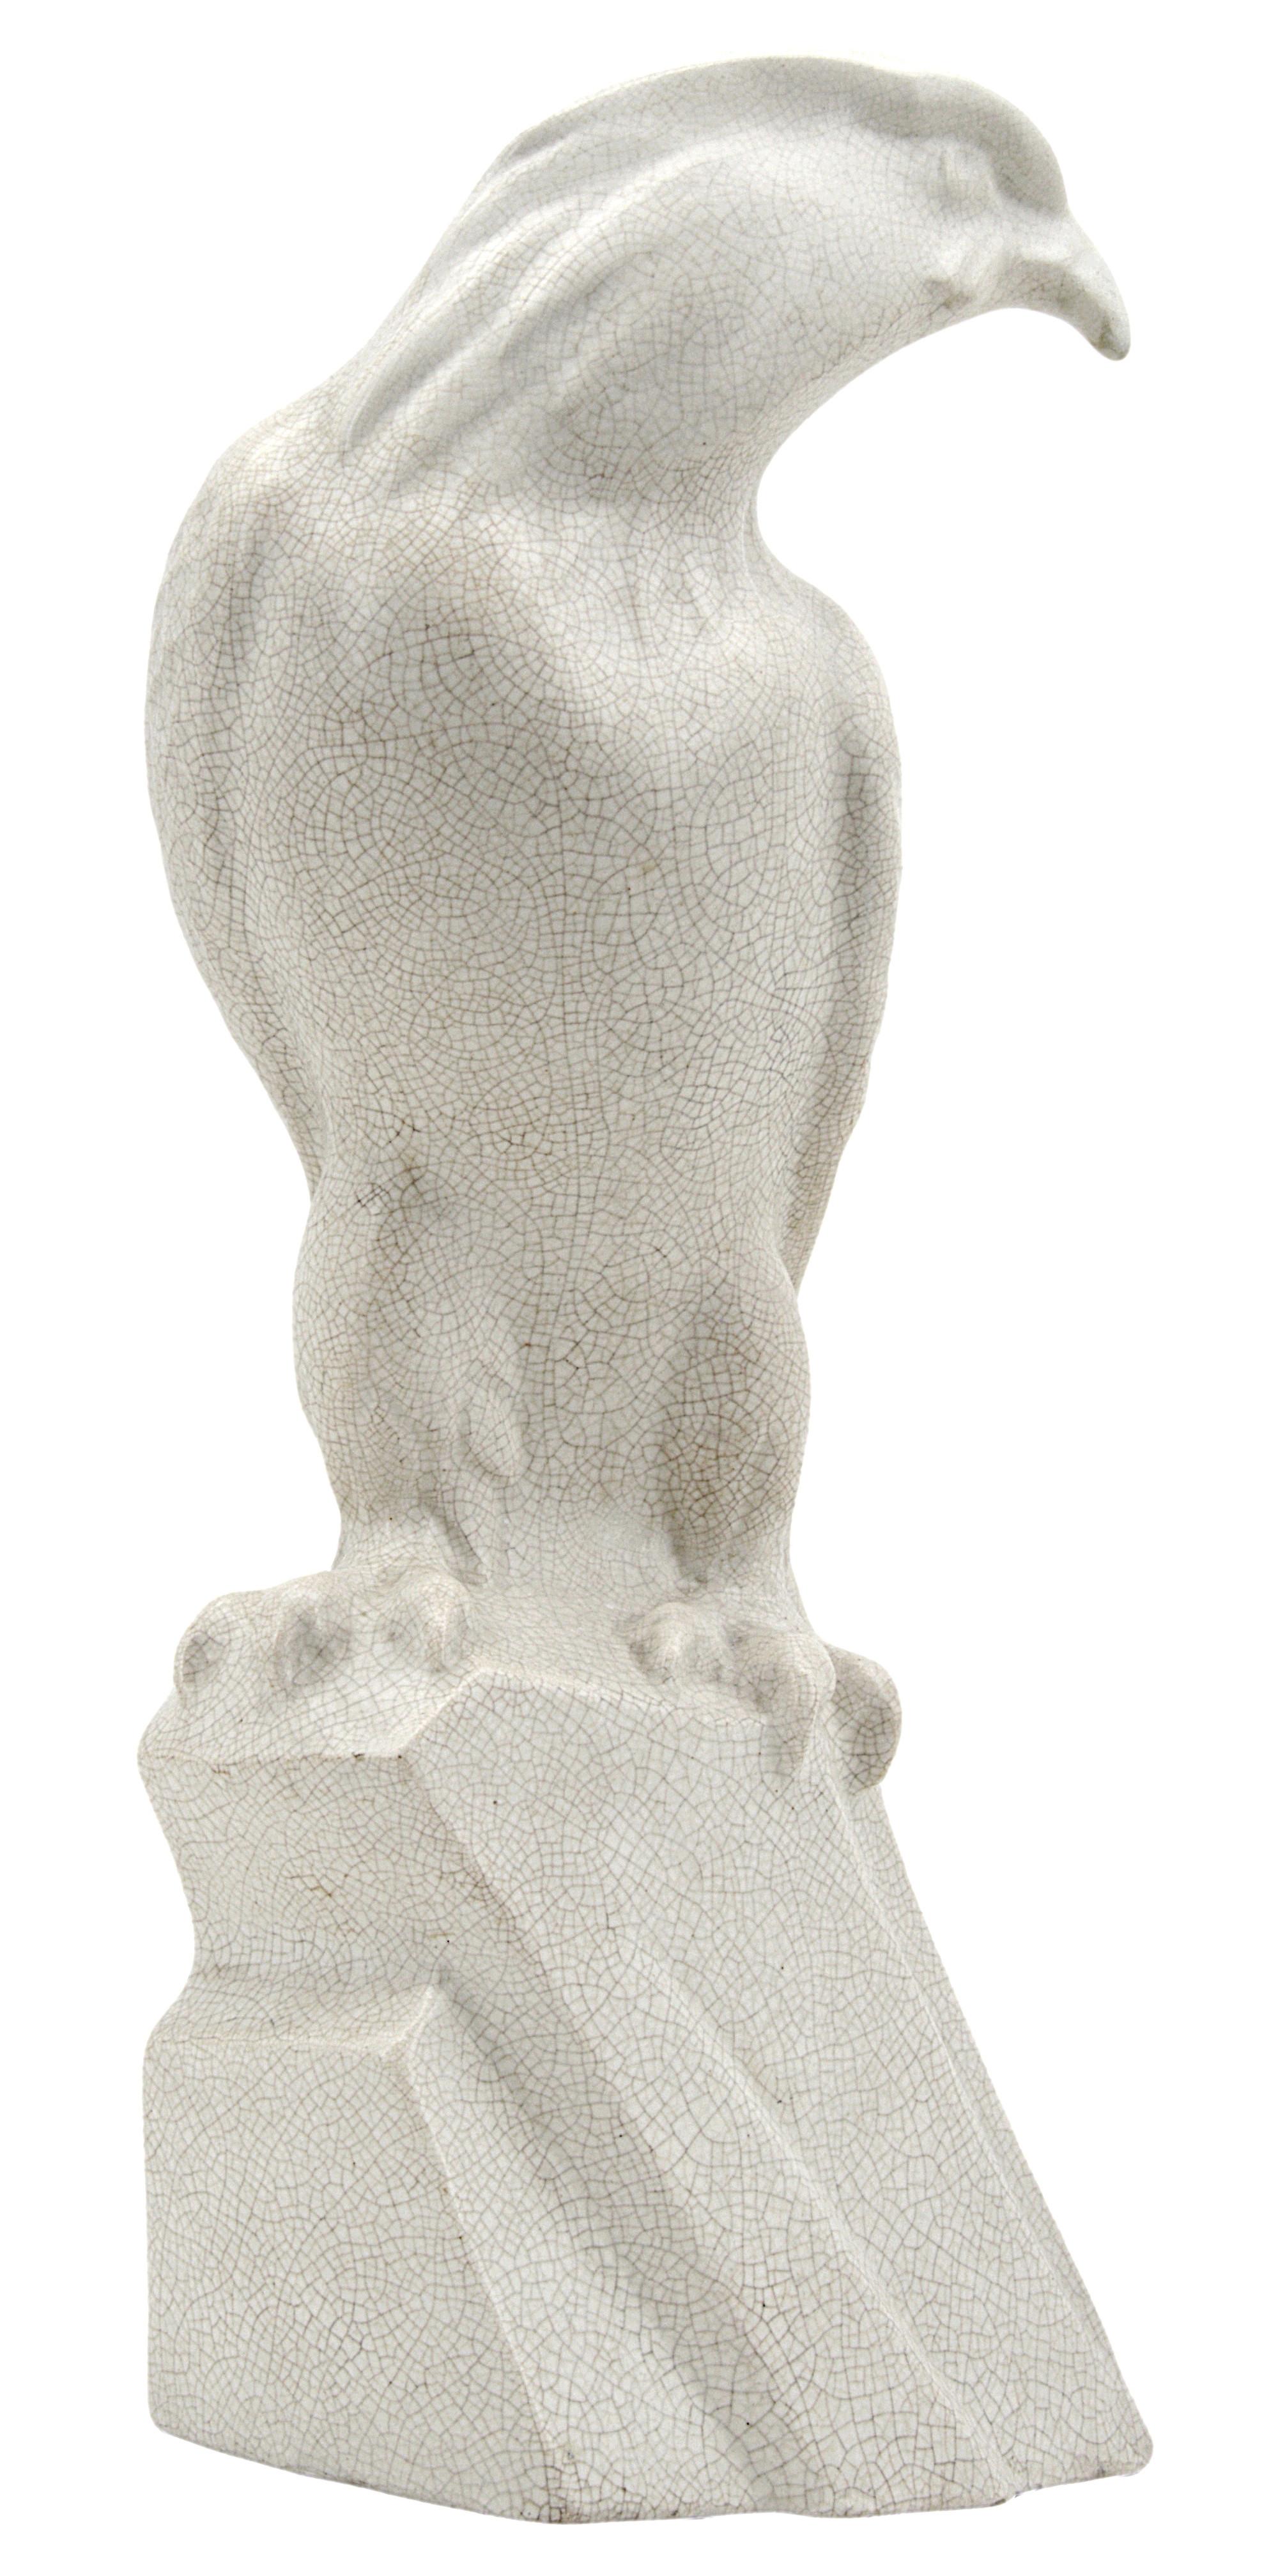 Crackle glaze ceramic sculpture by LEJAN at Orchies, France, ca.1925. 